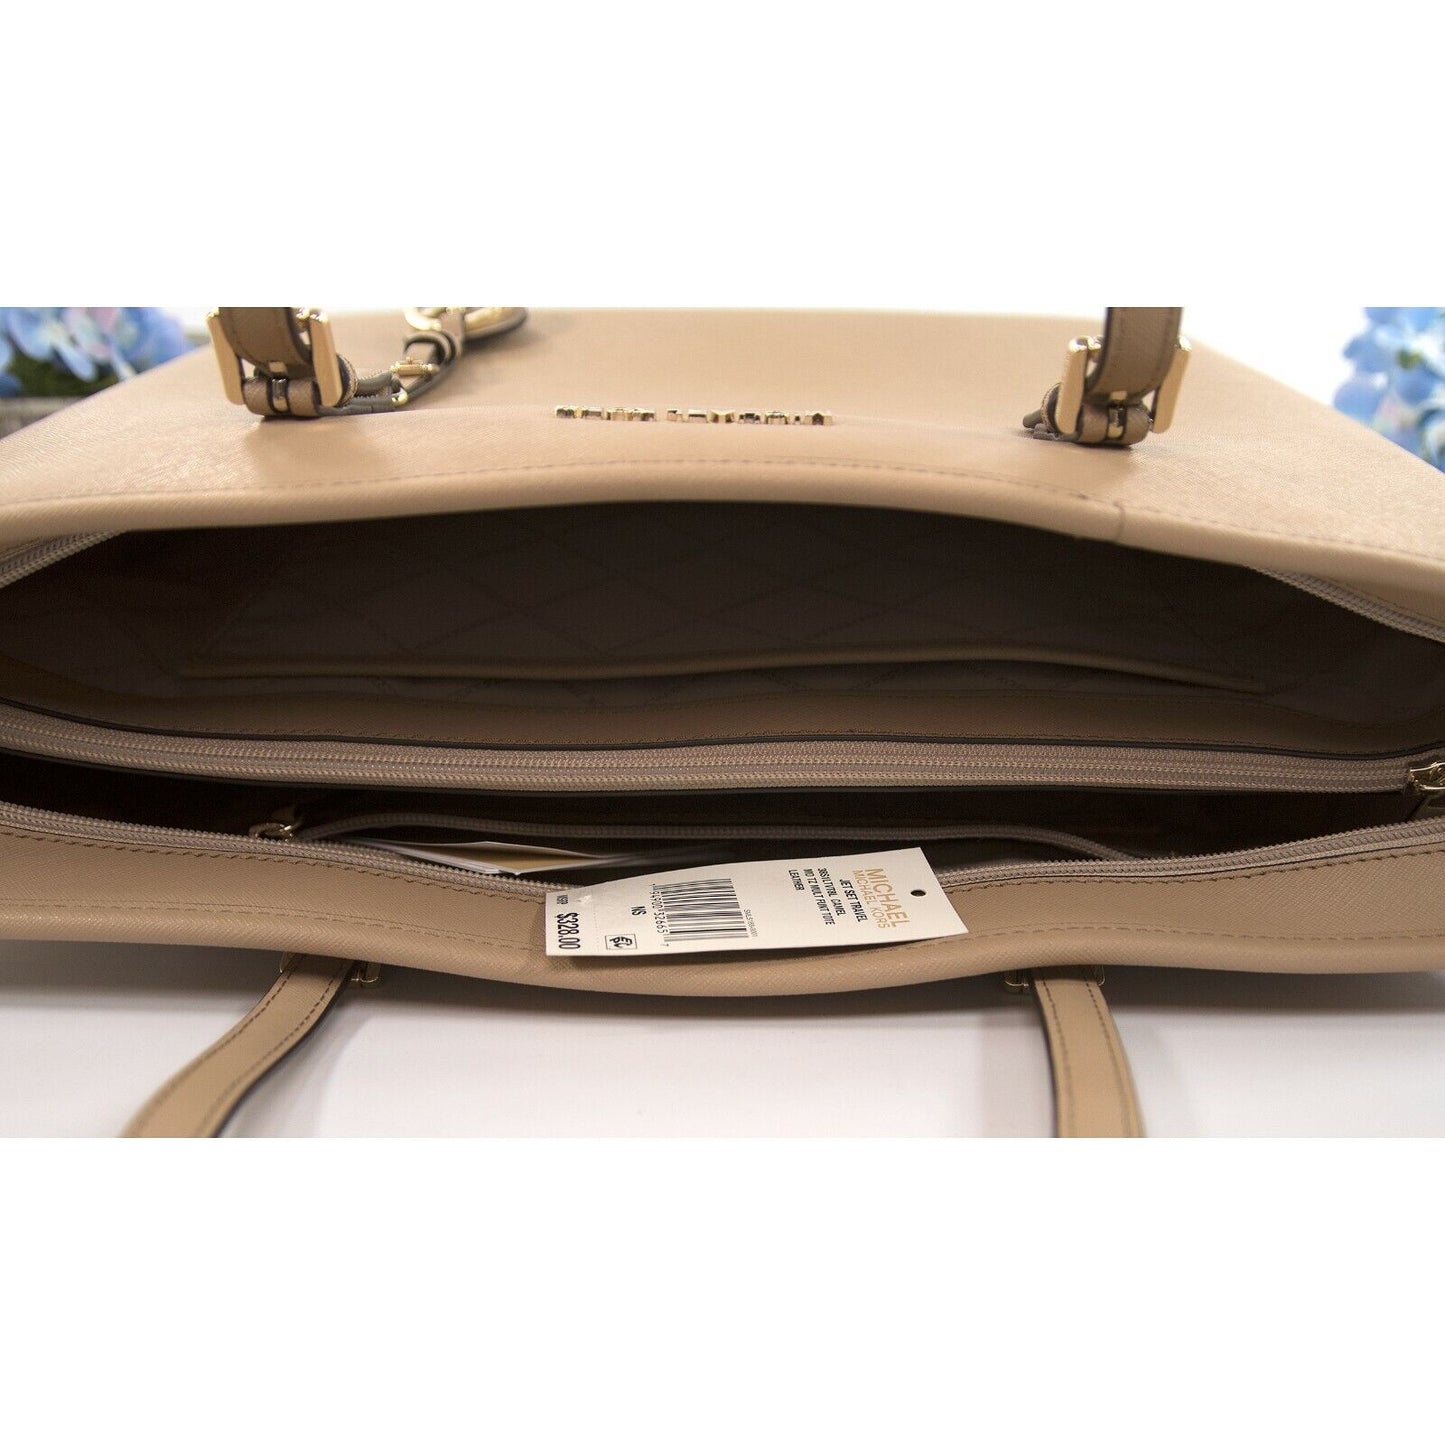 Michael Kors Camel Saffiano Leather Medium Multifunction Travel Tote Bag NWT